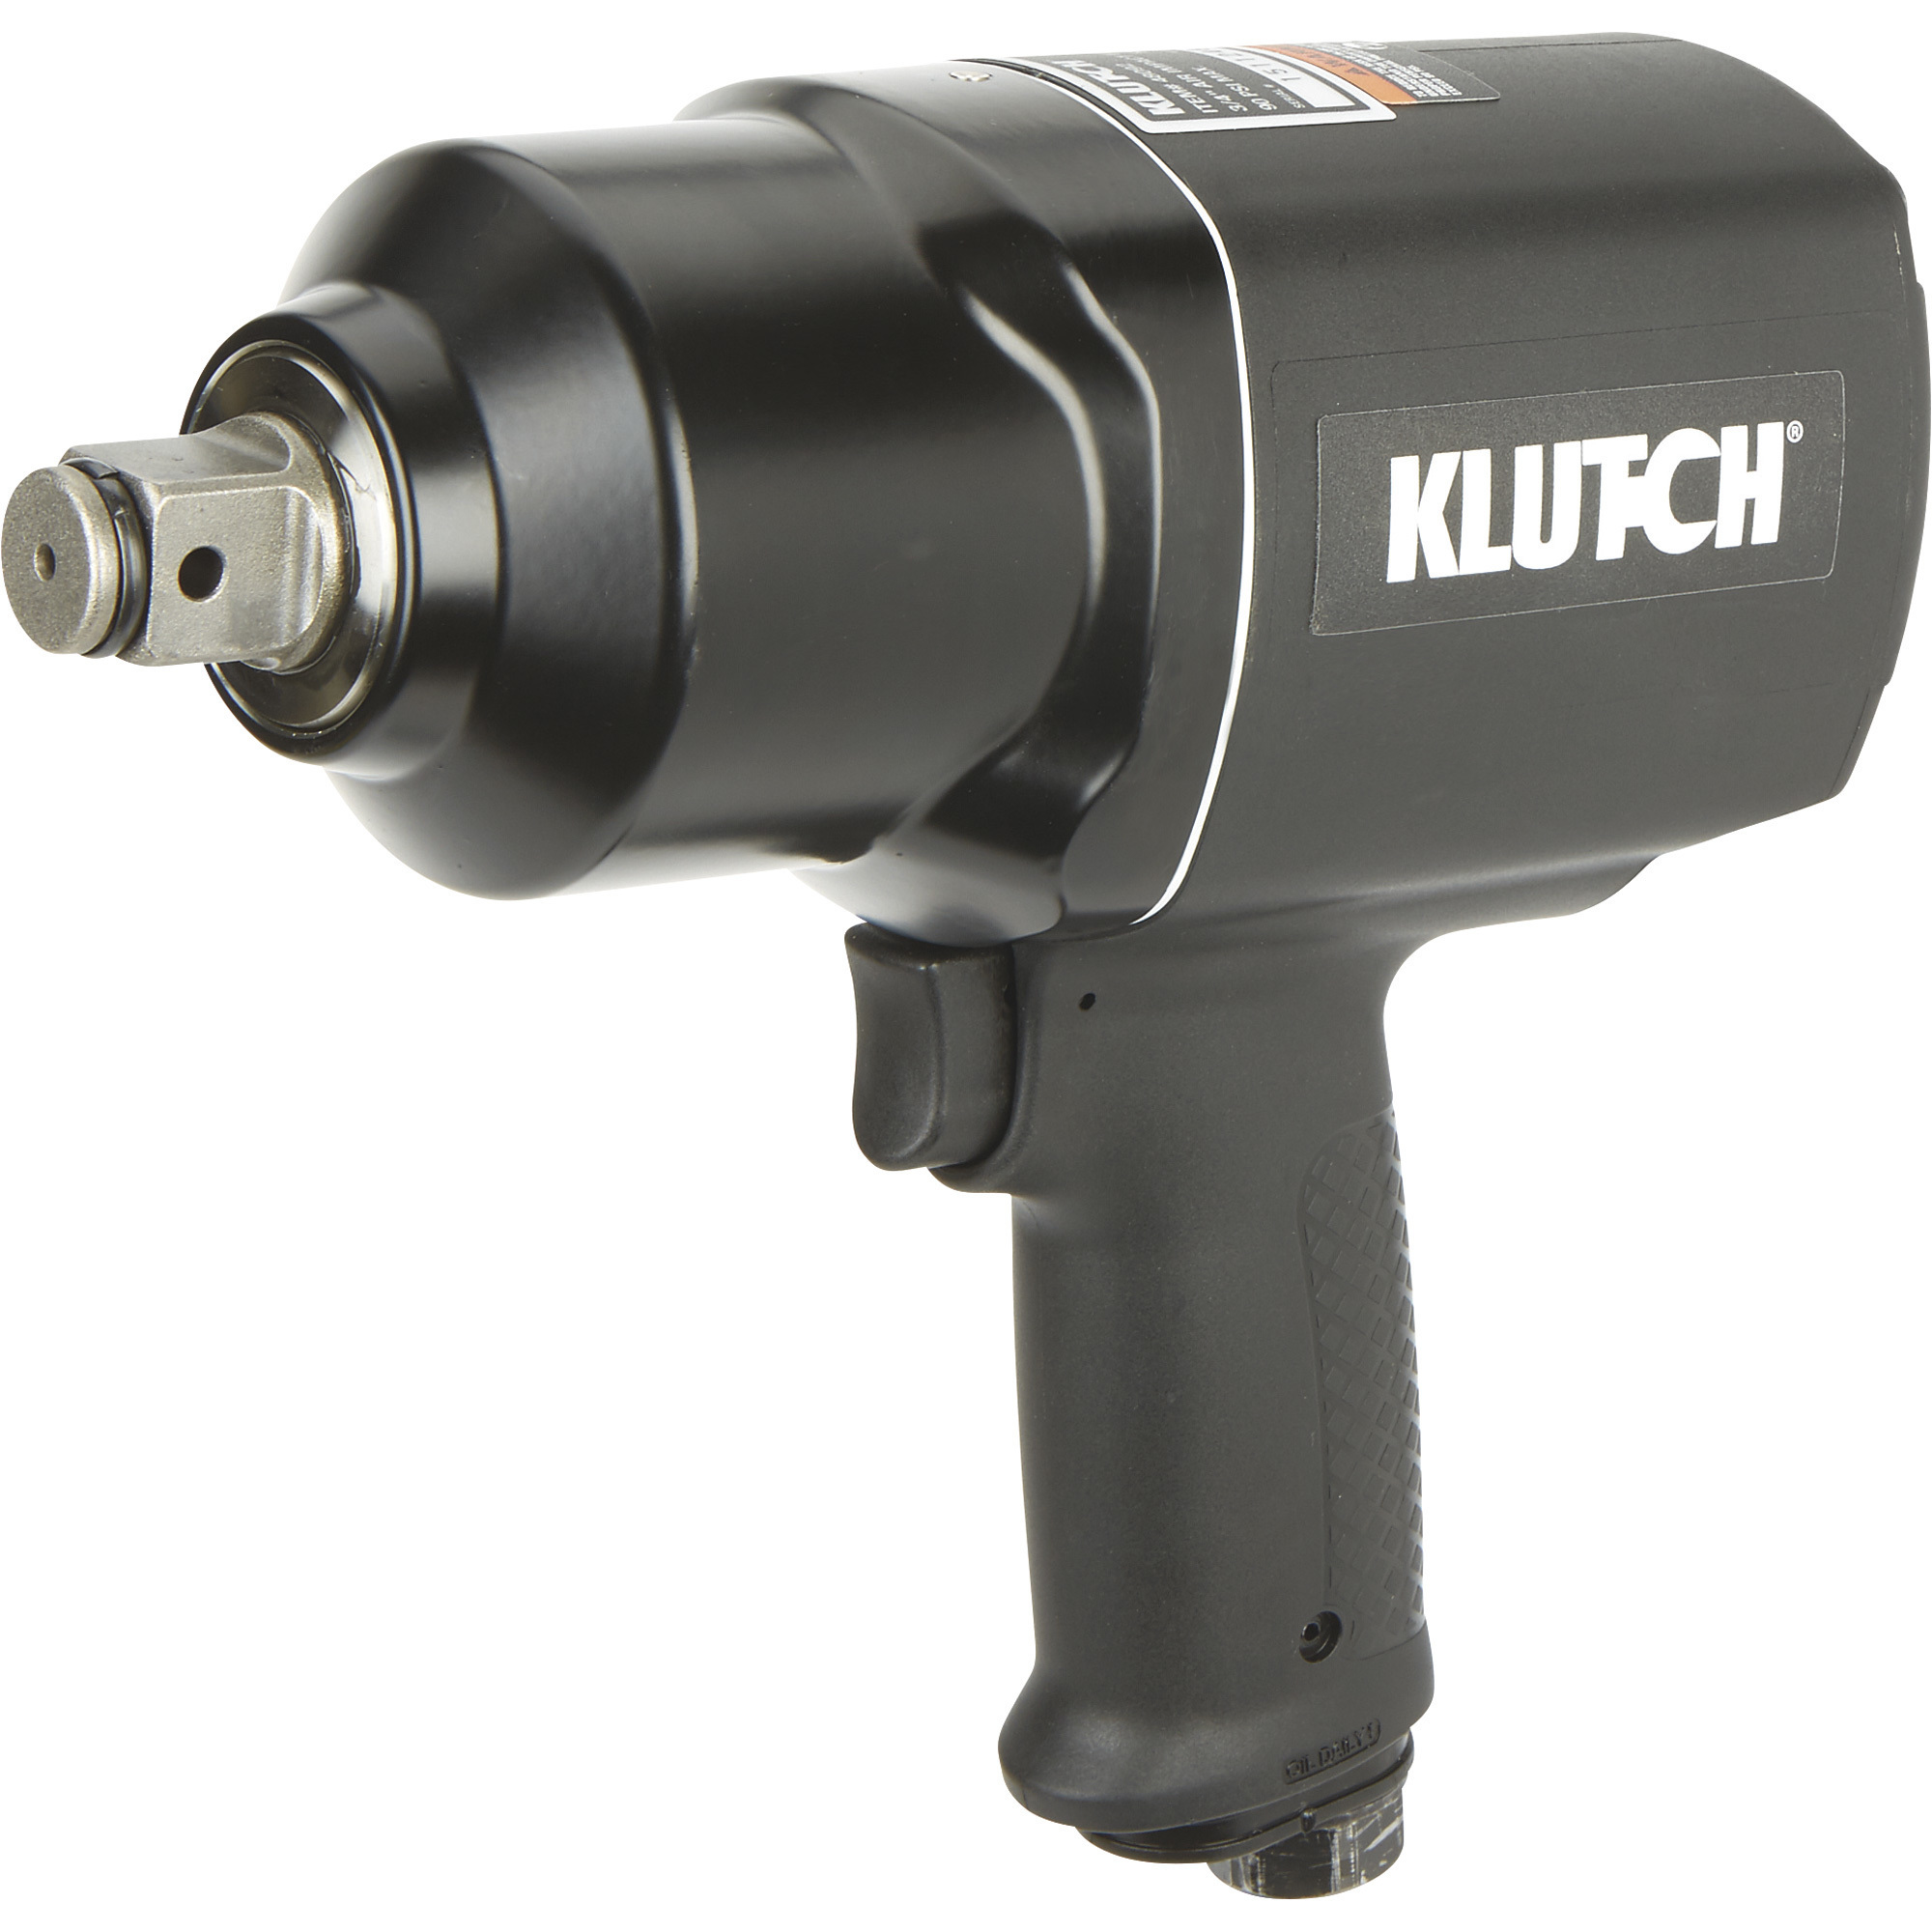 Klutch Air Impact Wrench, 3/4Inch Drive, 1500 Ft./Lbs. Torque, 7 CFM